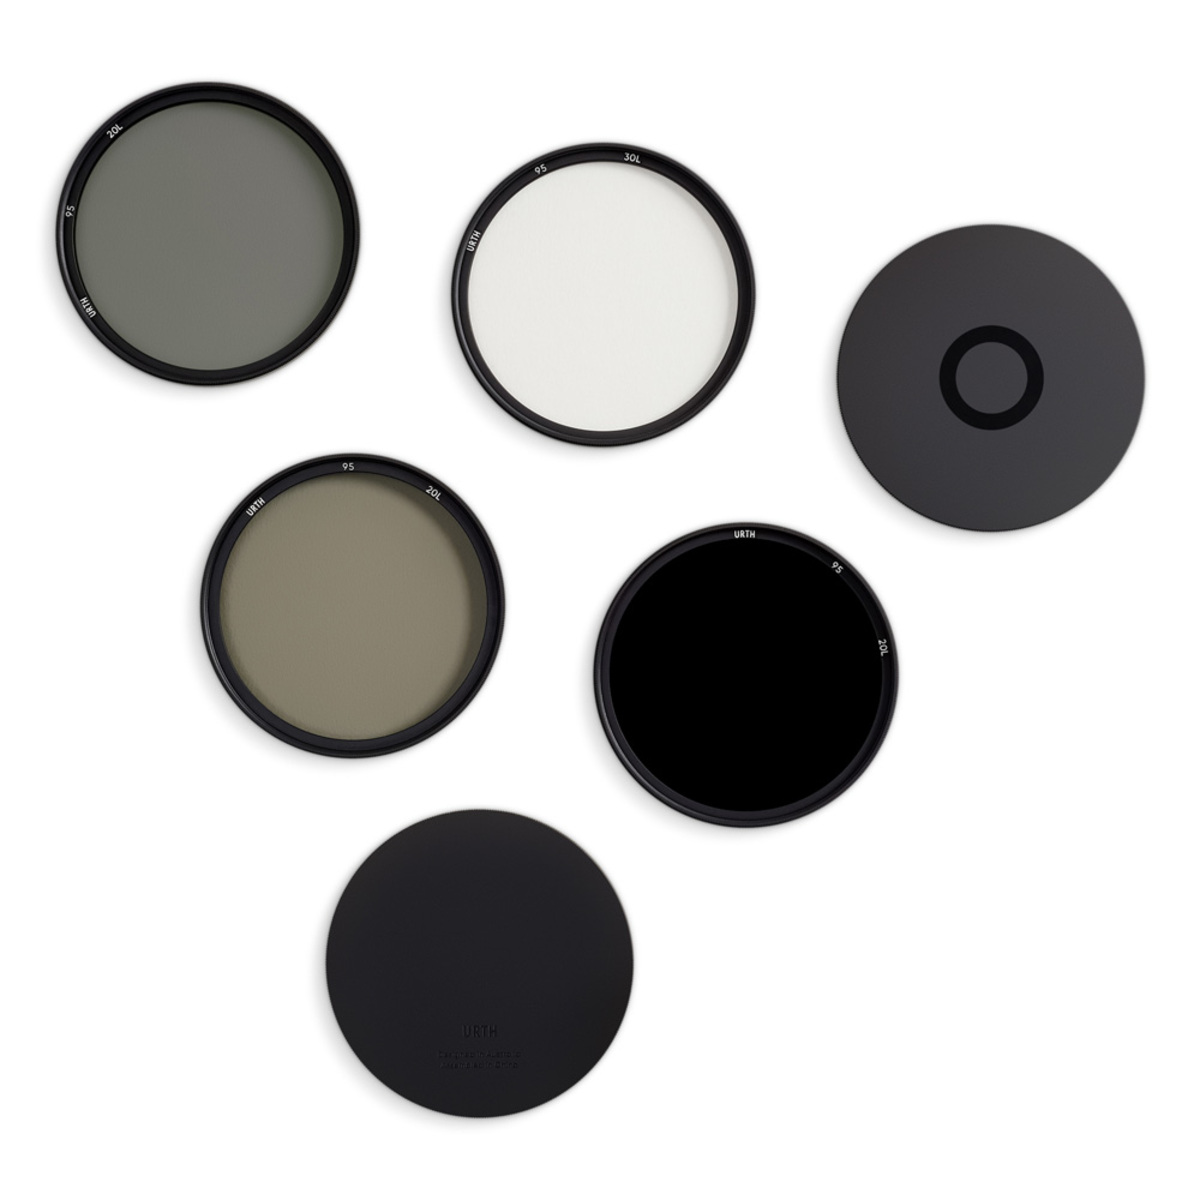 Urth 95mm UV, Circular Polarizing (CPL), ND8, ND1000 Objektivfilter Kit (Plus+)